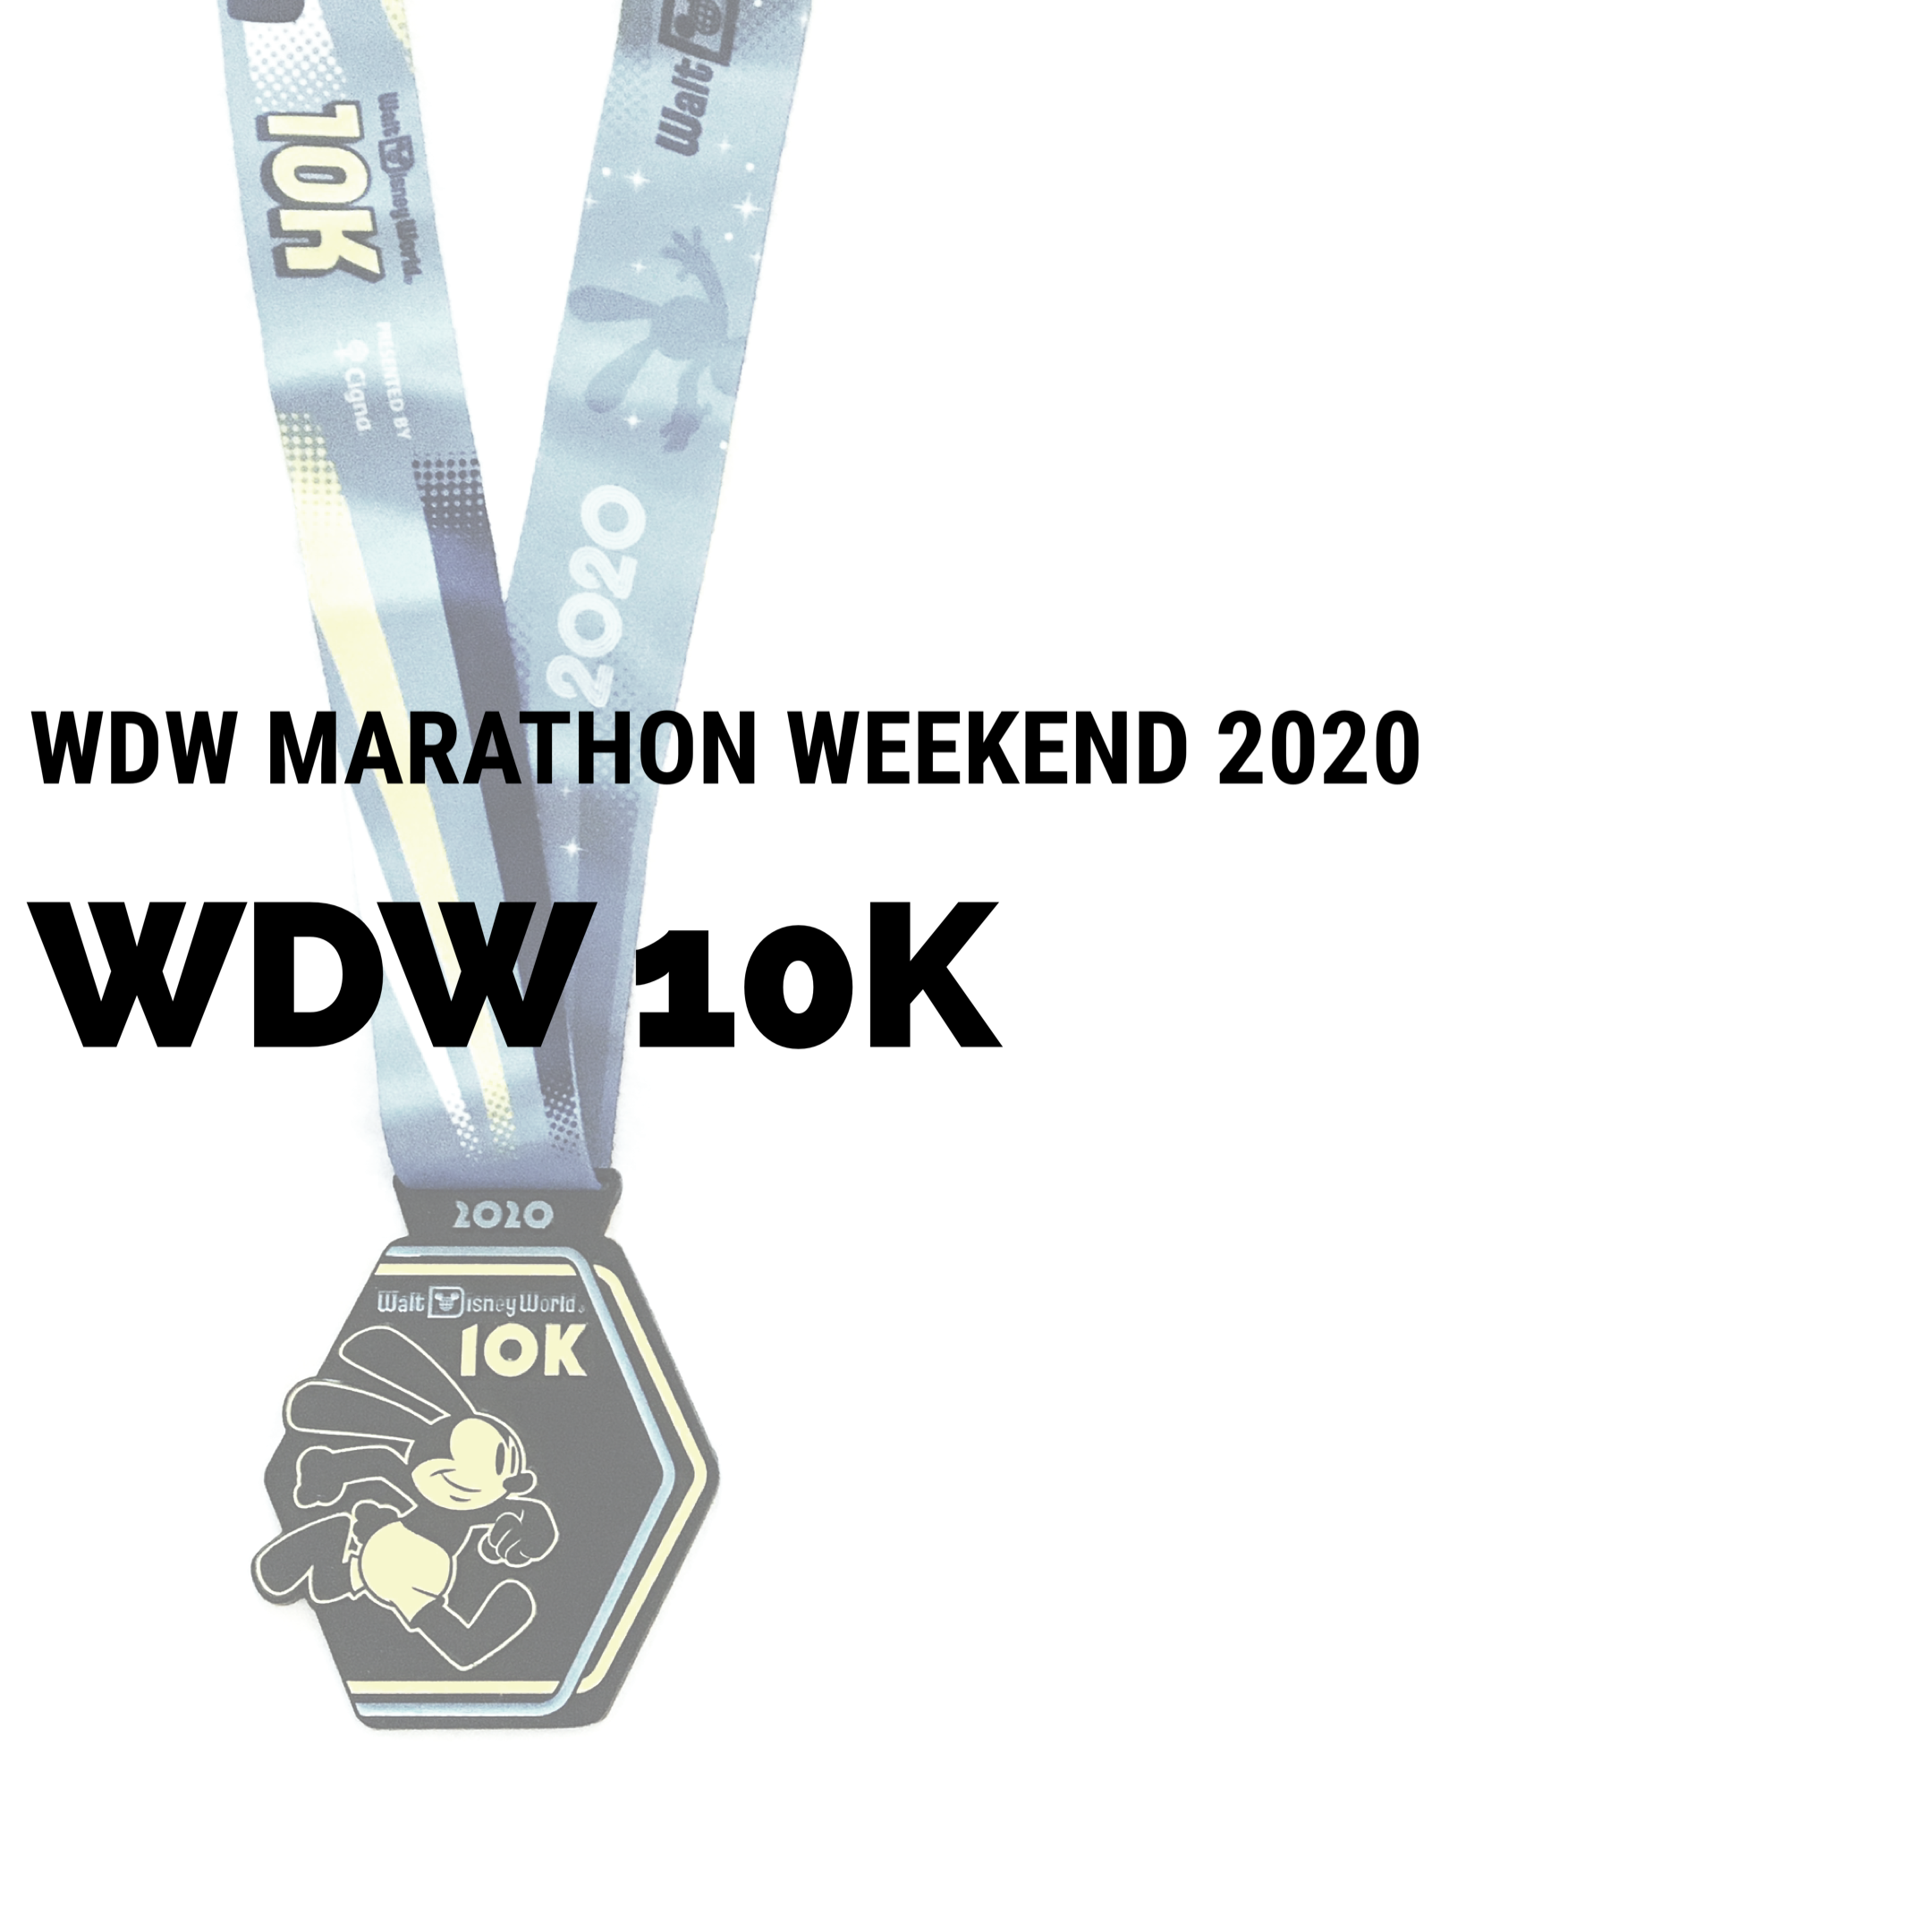 WDW Marathon Weekend 2020: WDW 10k